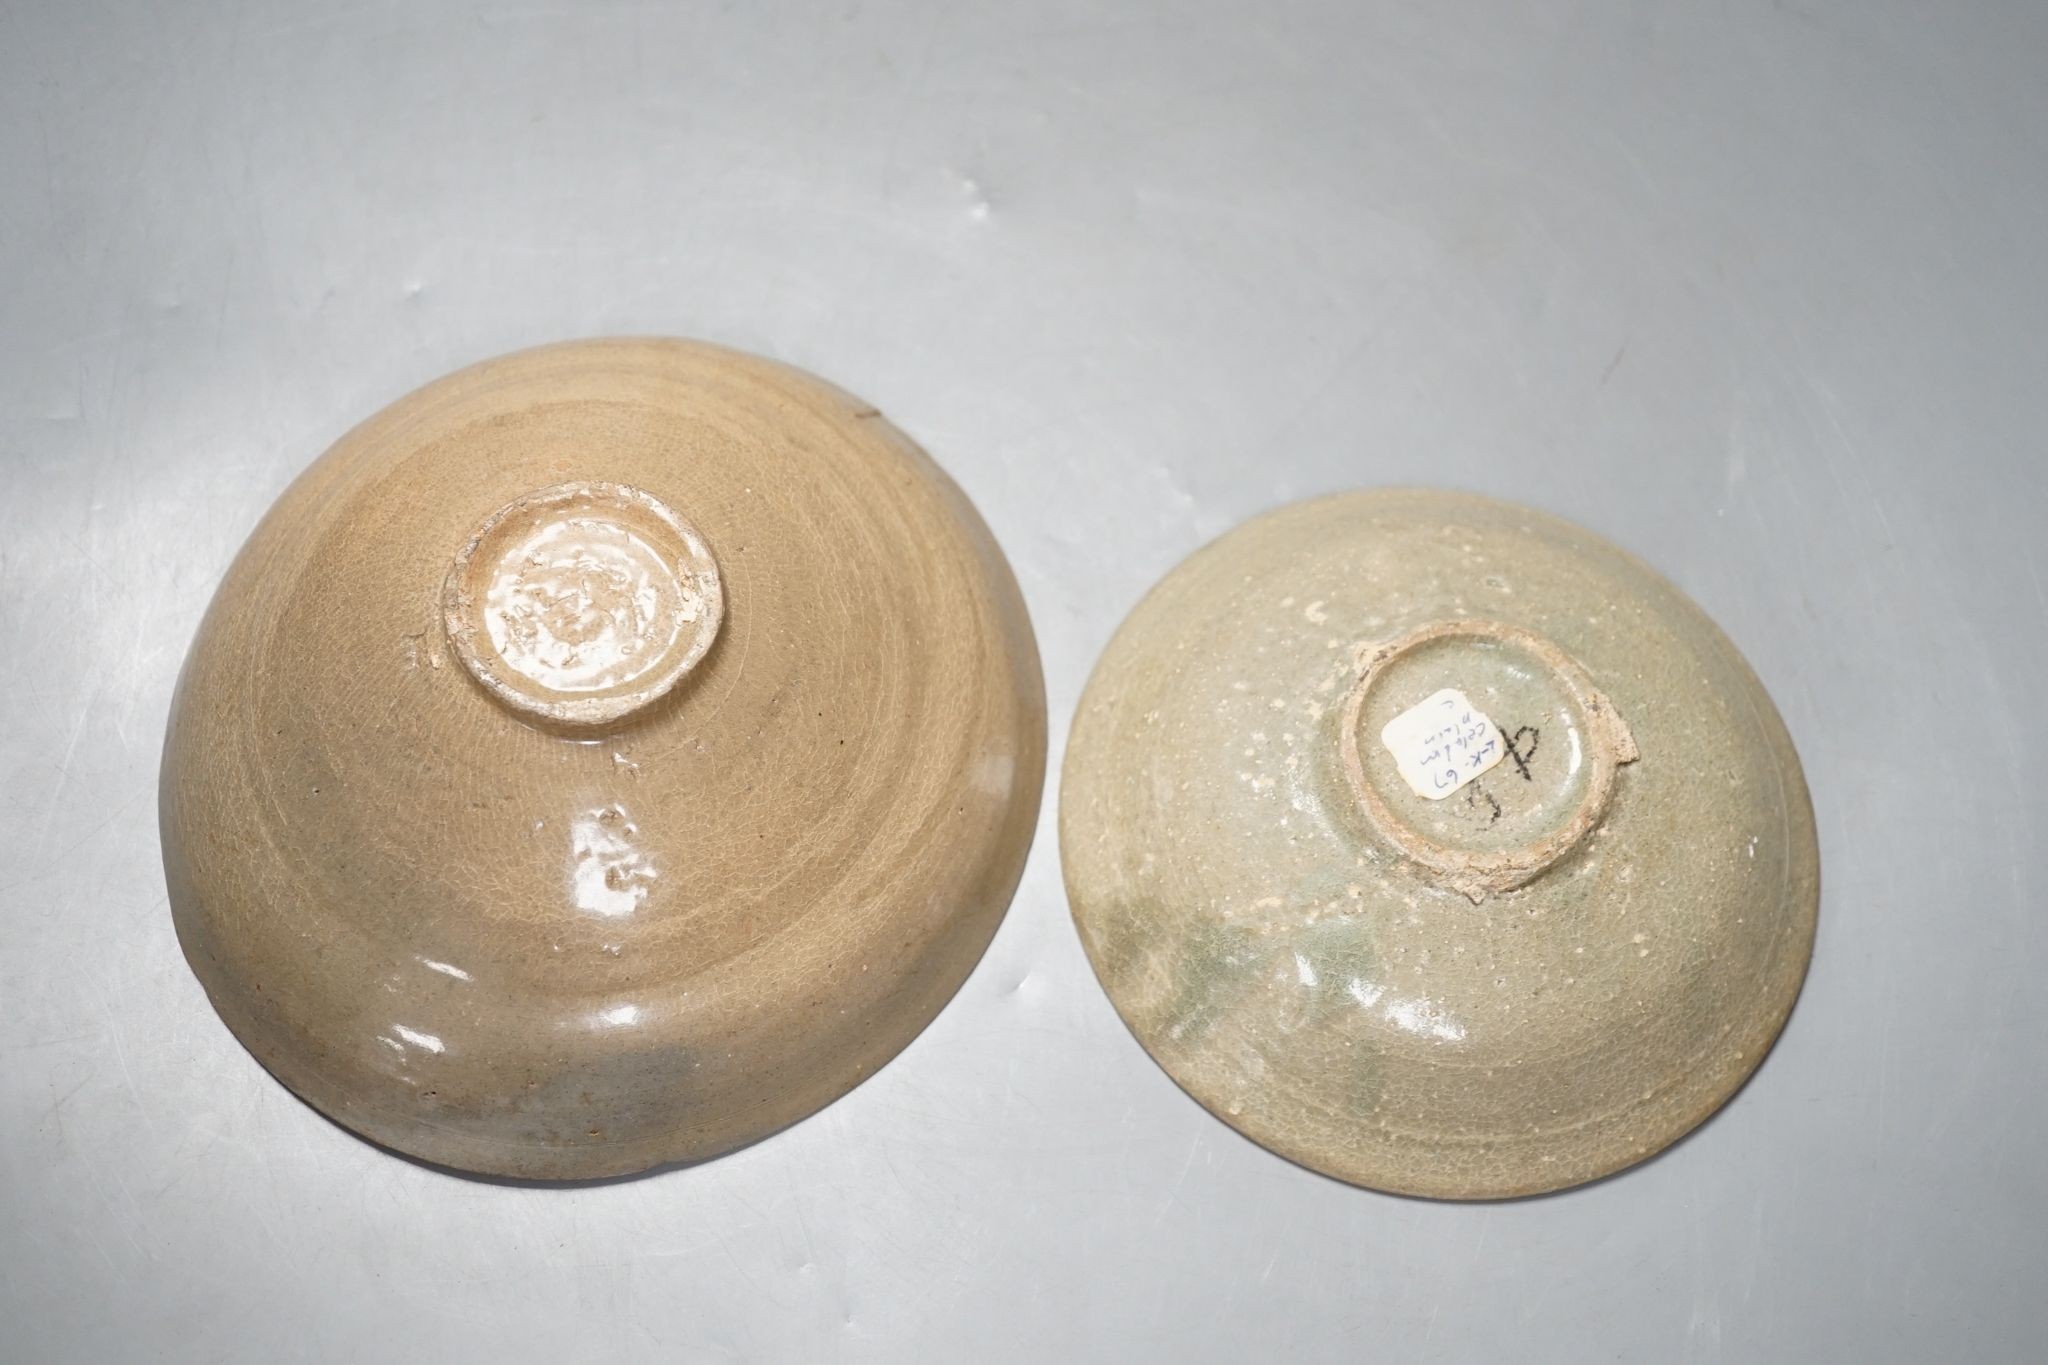 Two Korean celadon bowls or dishes, Goreyo dynasty., largest 17 cms diameter.